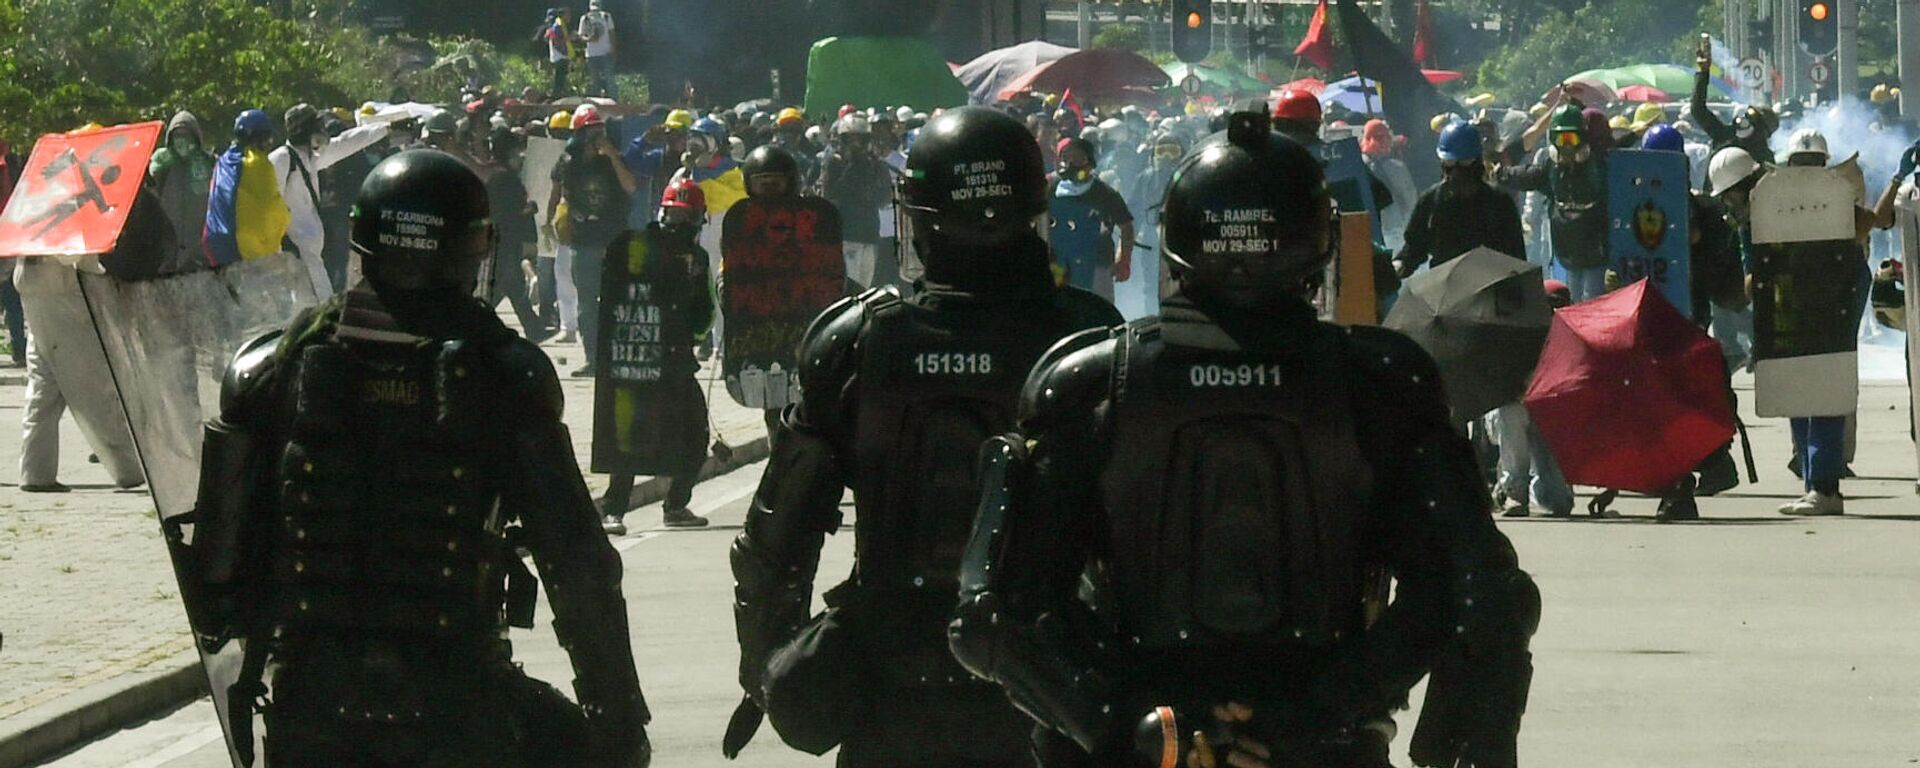 Policía antidisturbios en Bogotá, Colombia - Sputnik Mundo, 1920, 09.09.2021